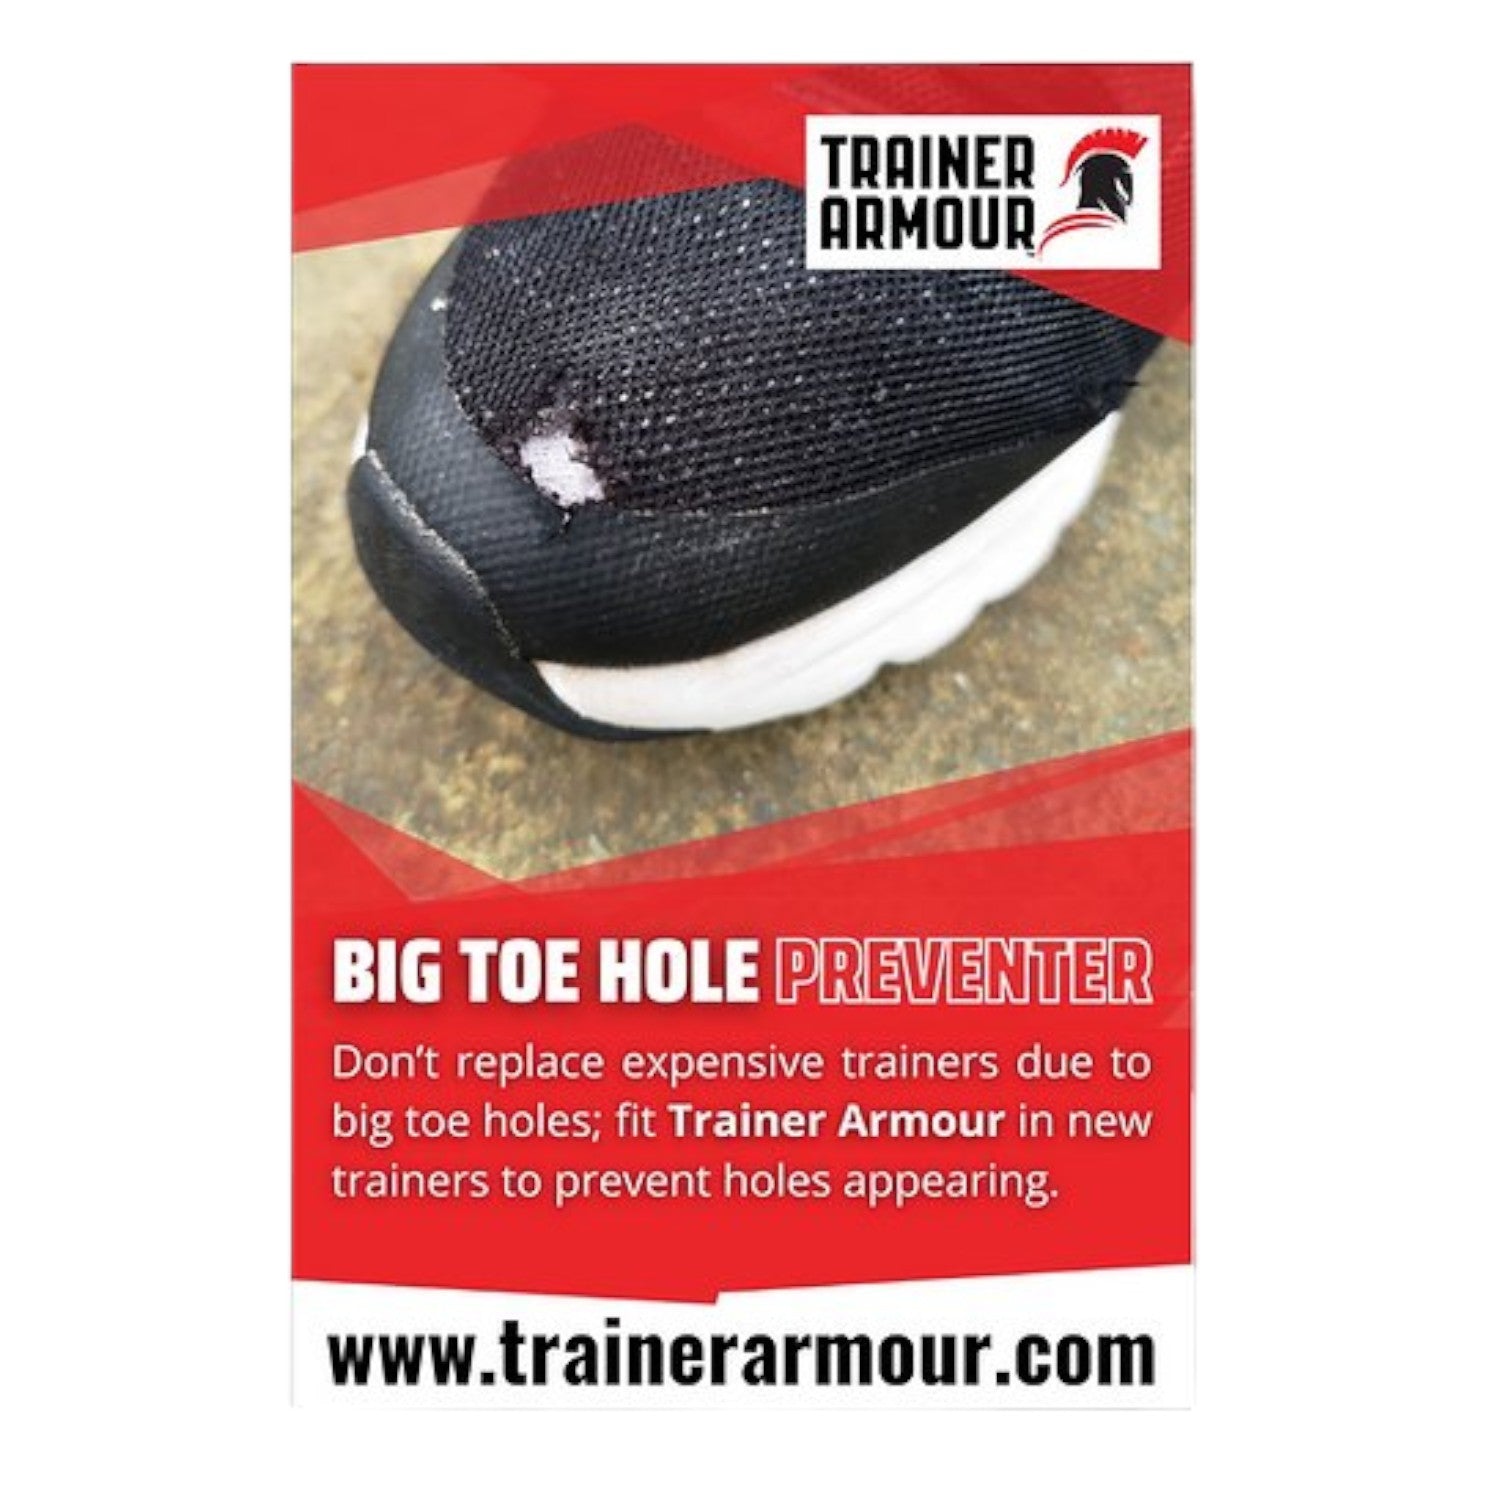 Trainer Armour Big Toe Hole Preventer 1 Pack